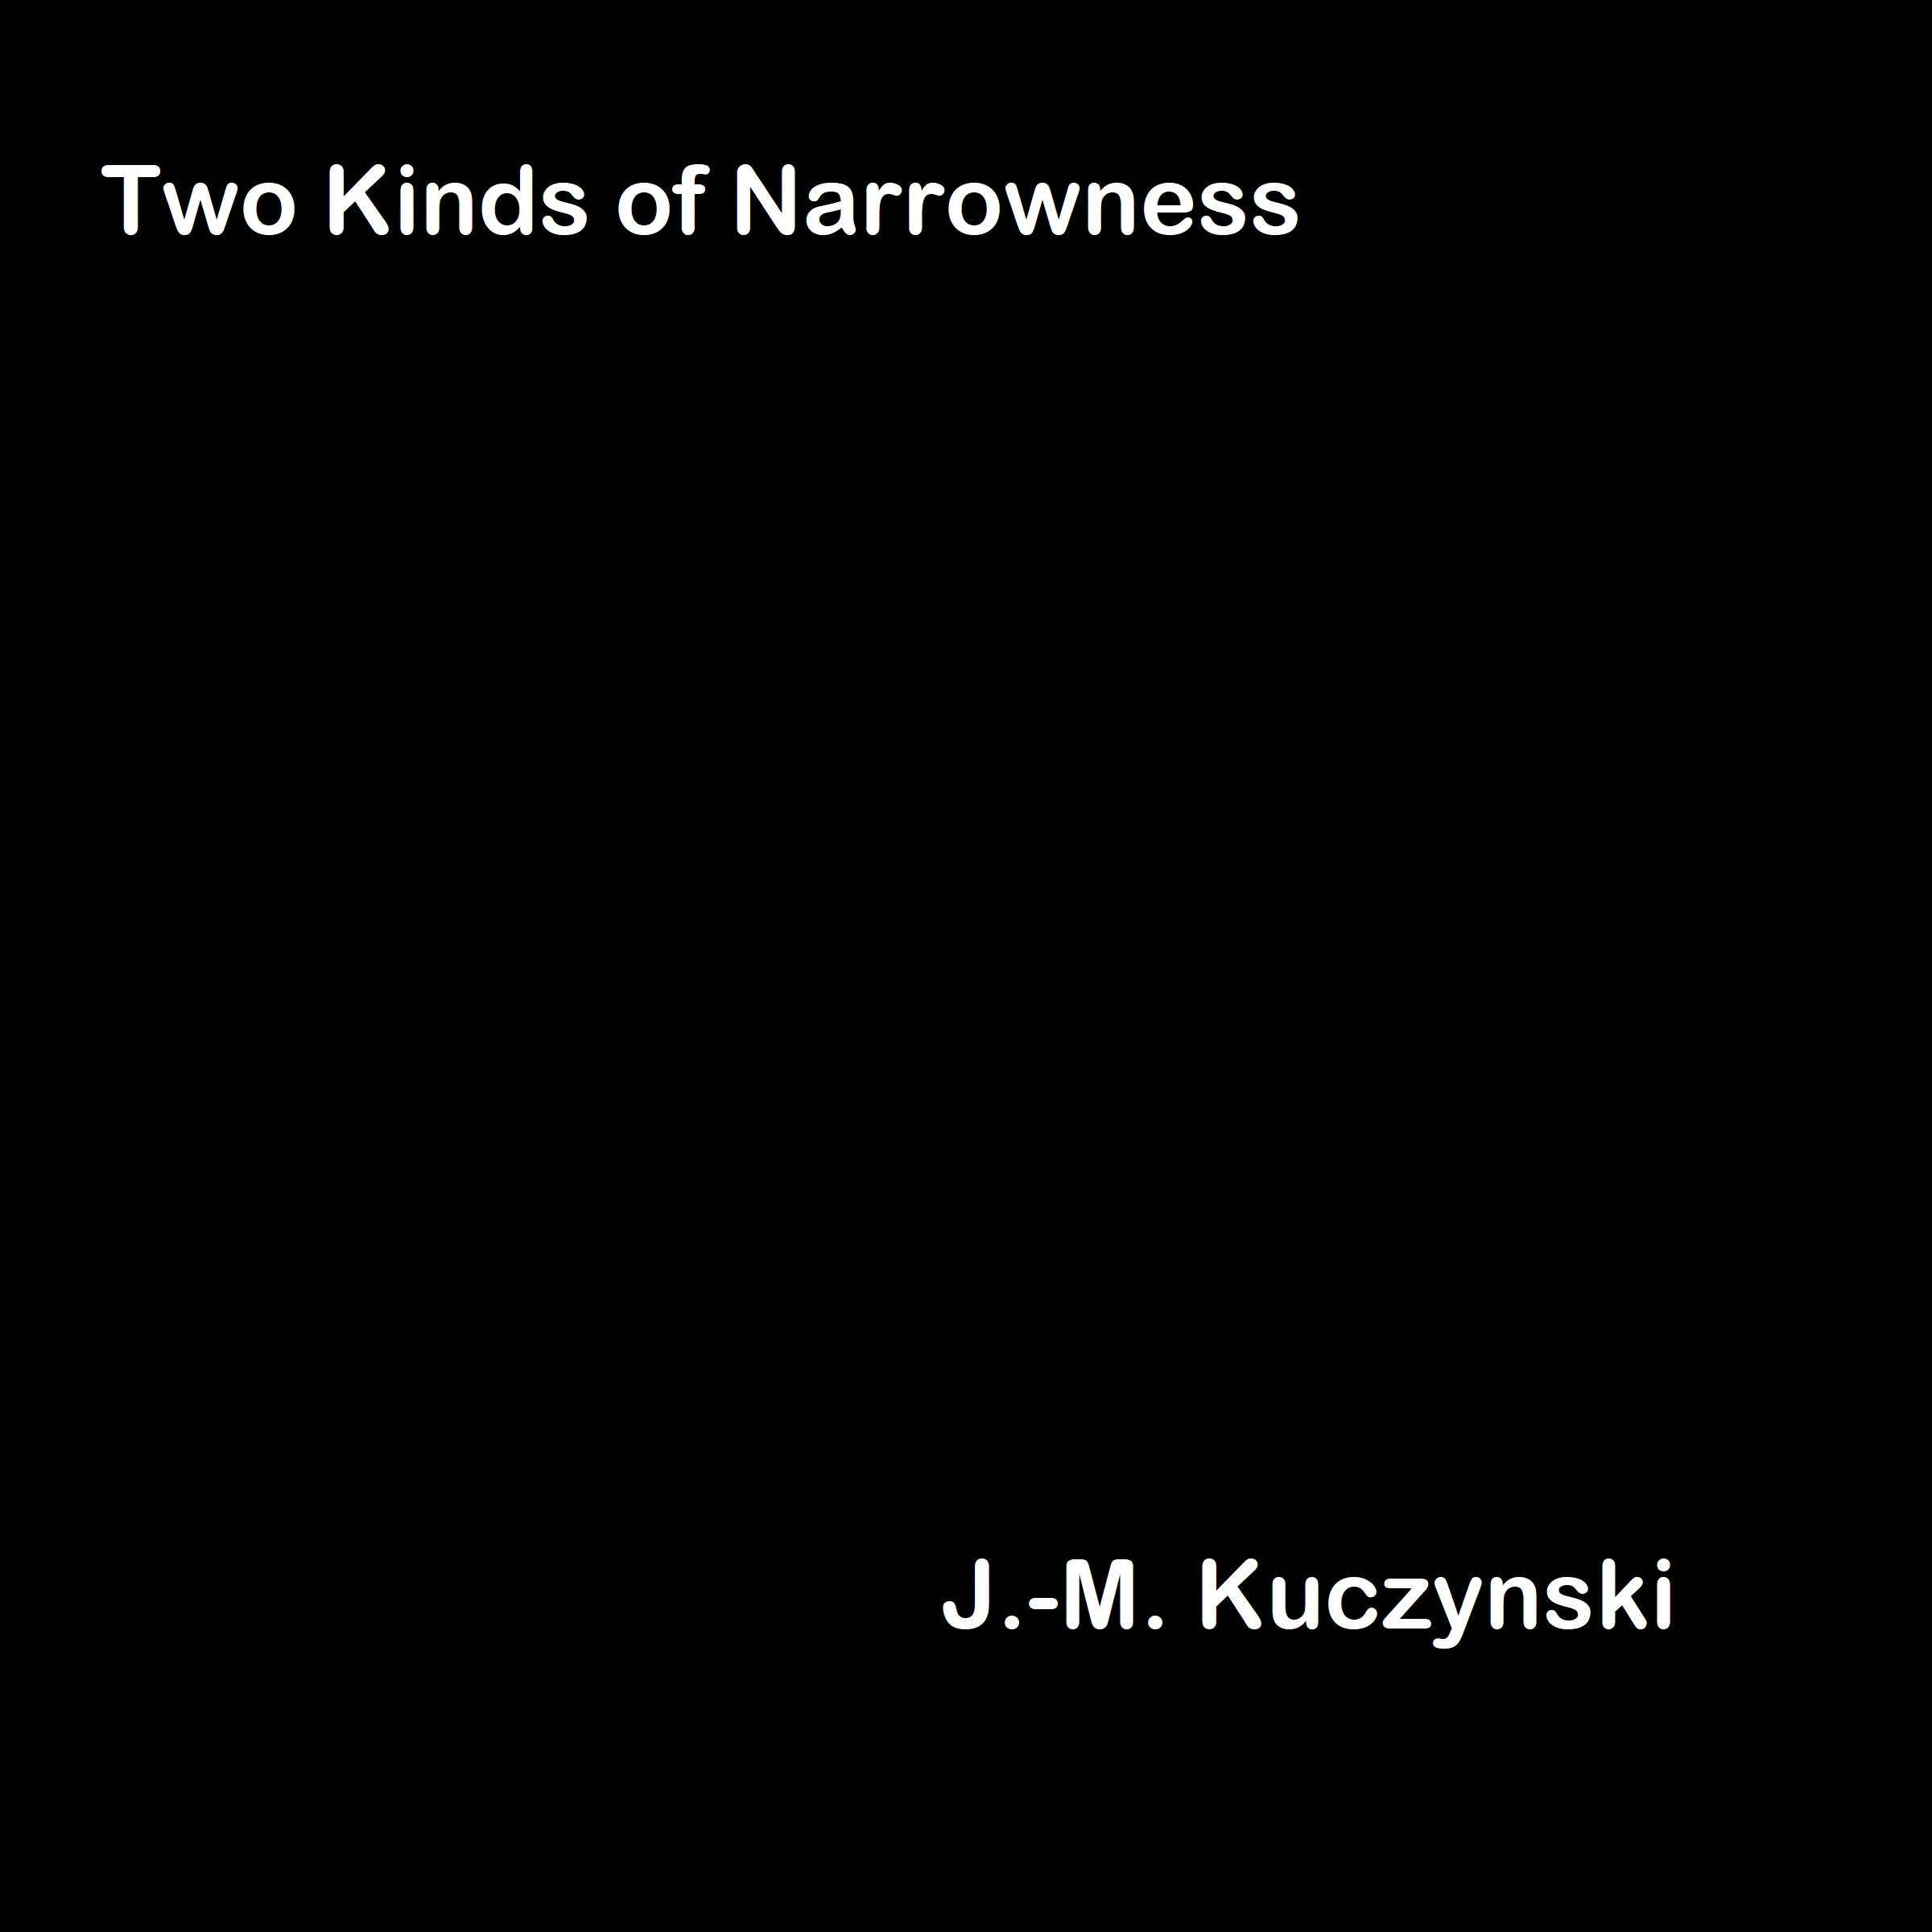 Two Kinds of Narrowness Audiobook by J.-M. Kuczynski